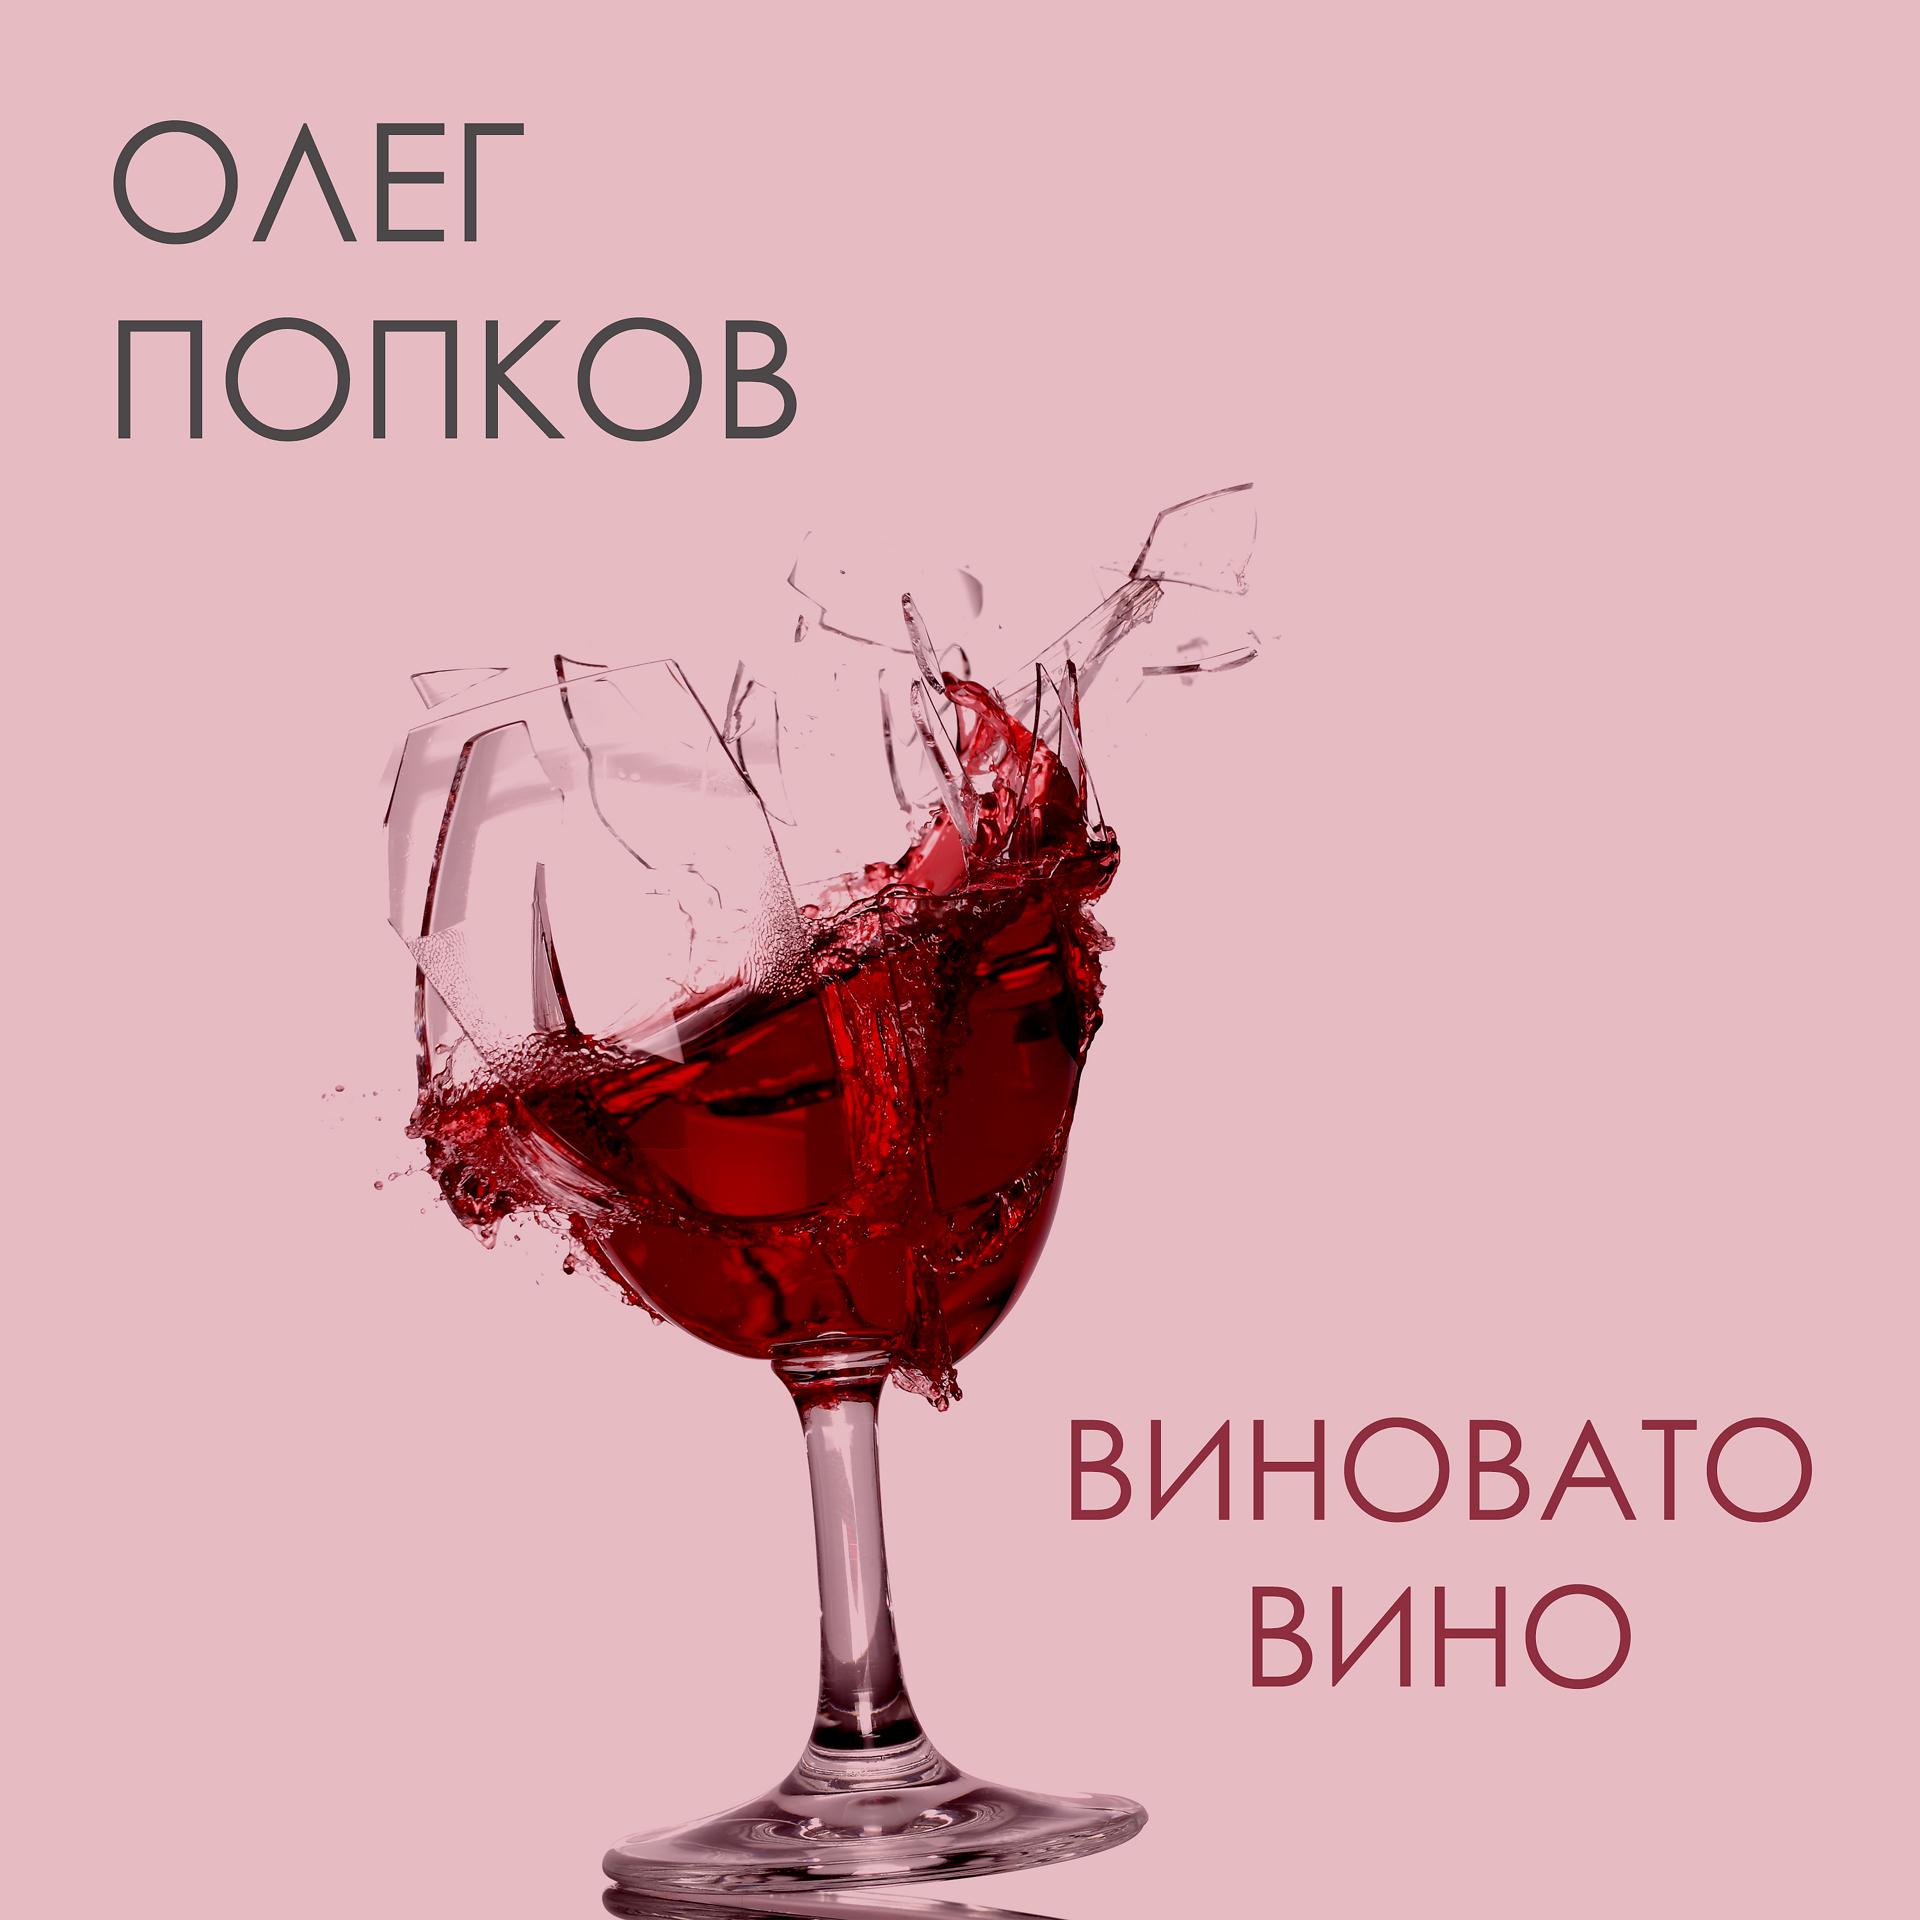 Вино помогает забыться. Вино обложка. Вино Oleg. Вино виновато. Слово вино.